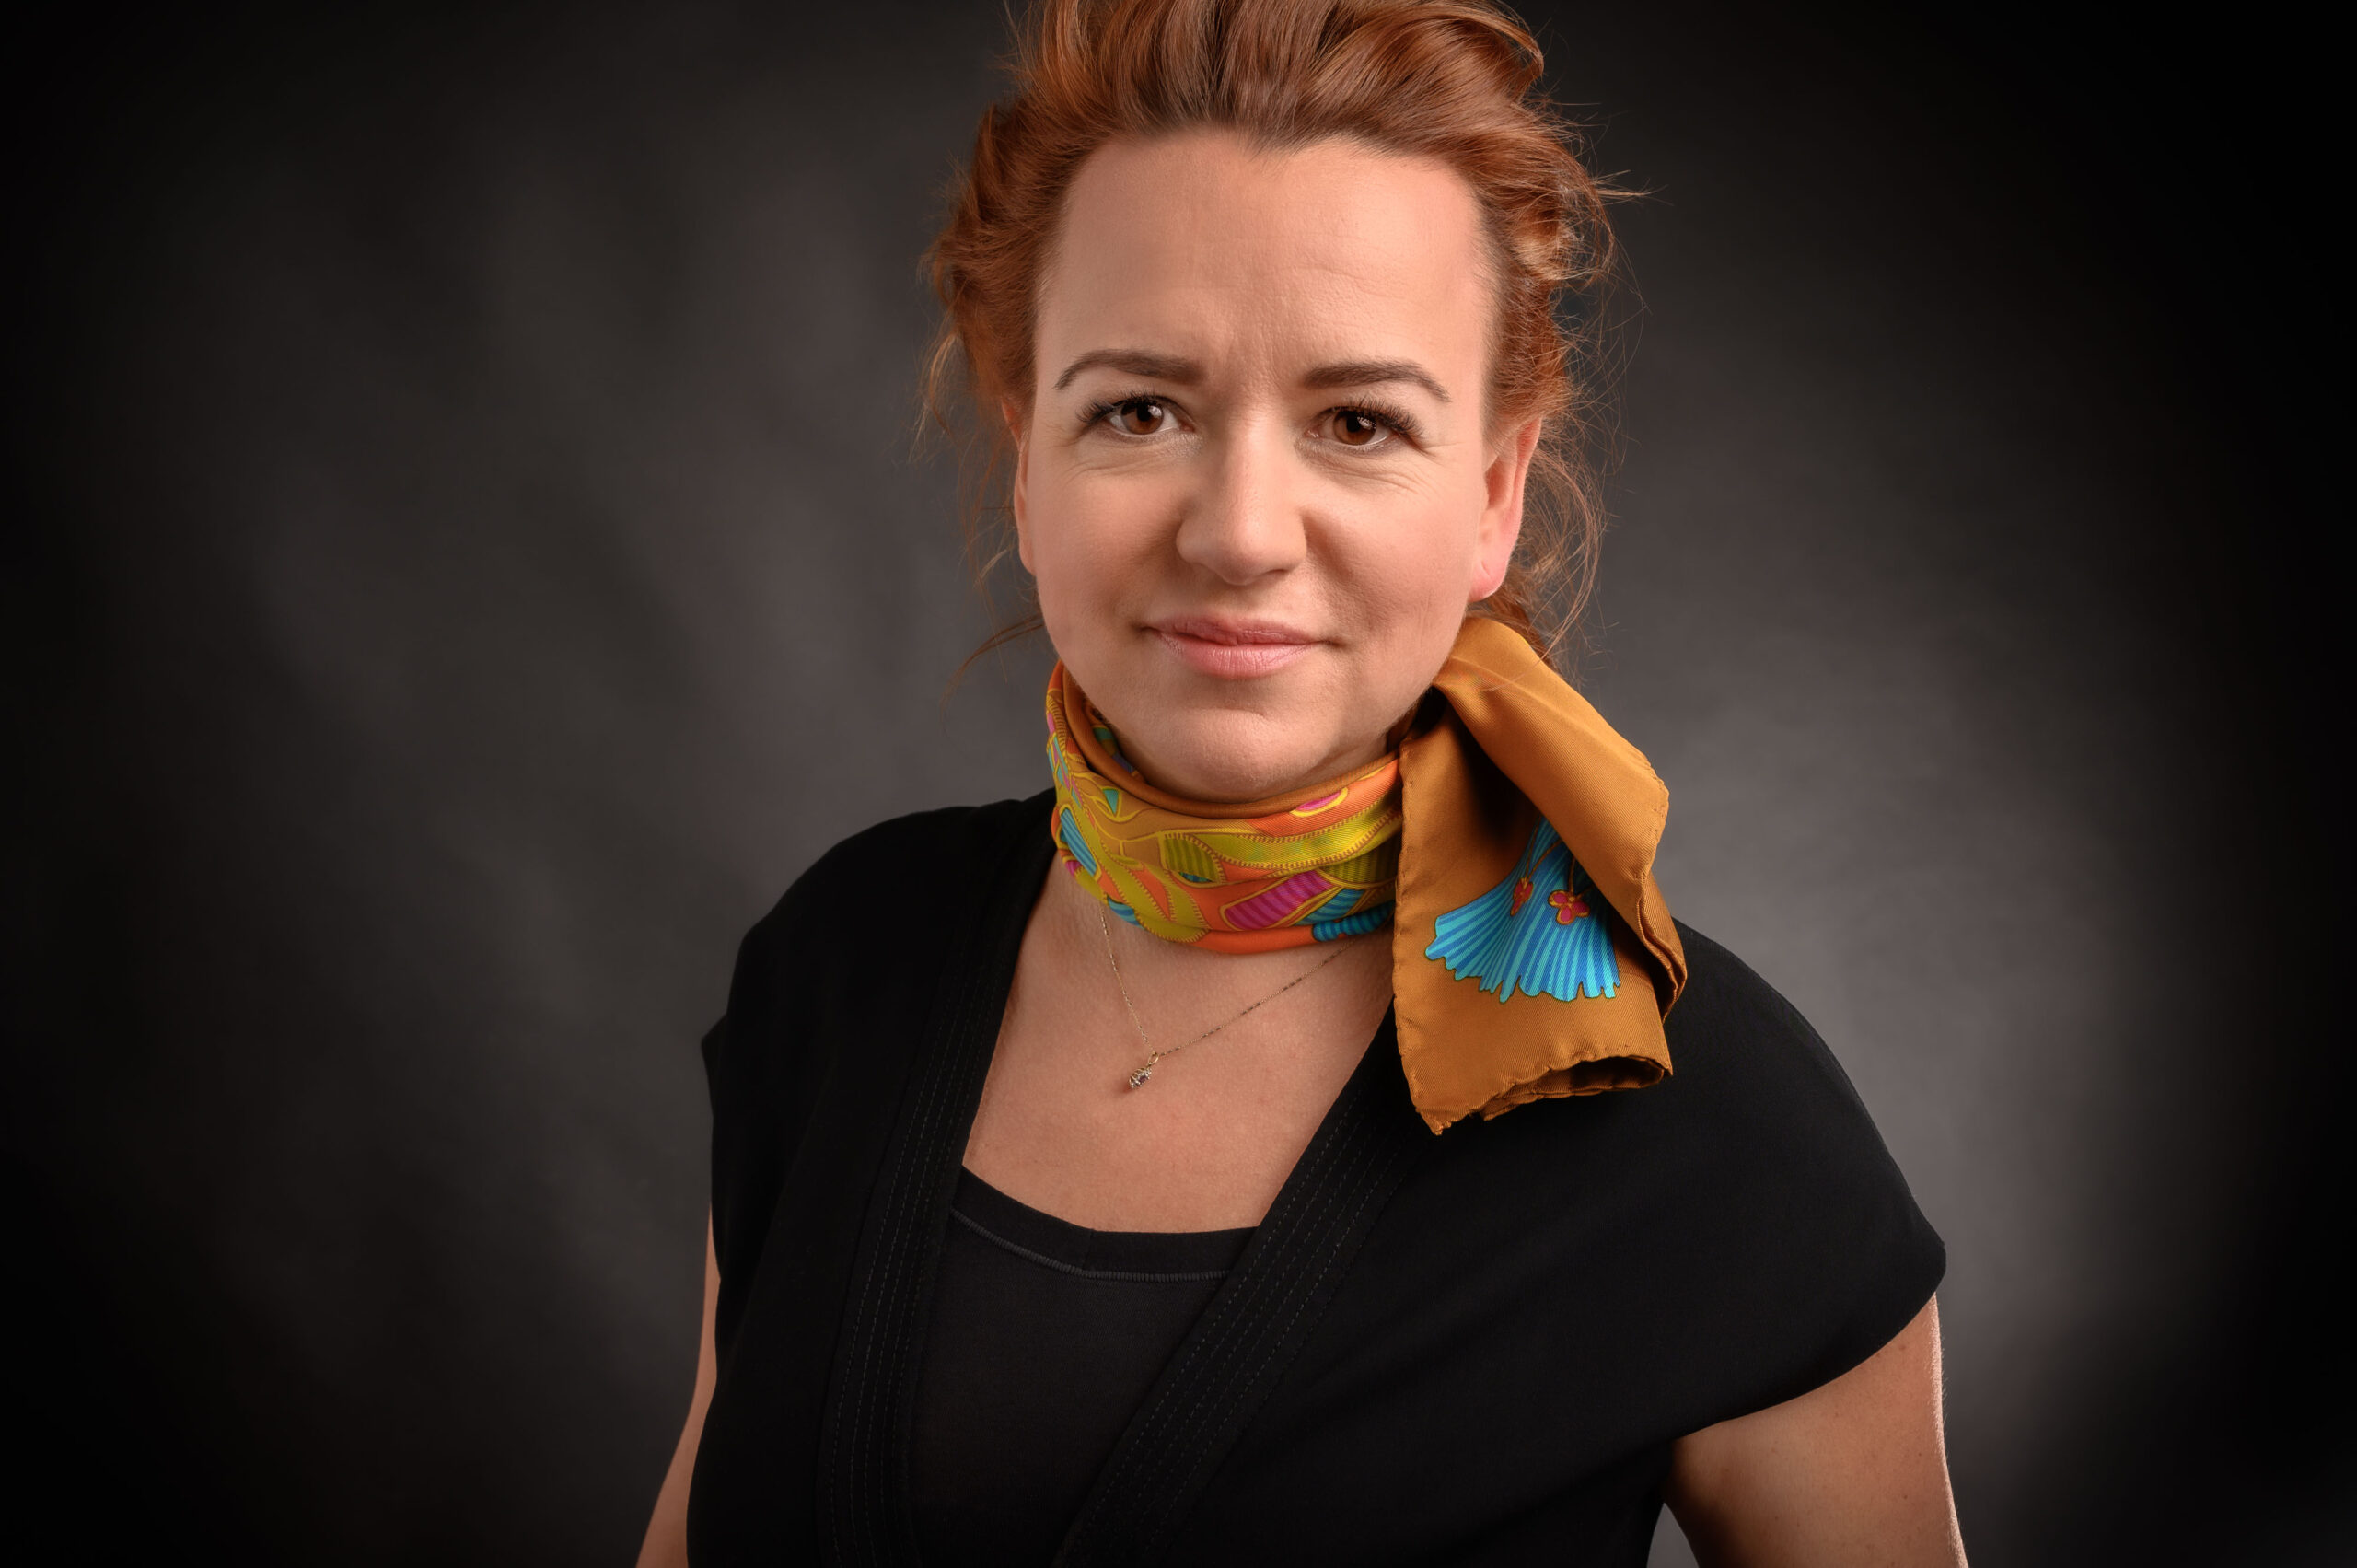 Univ. Prof. Nicole Meisner-Kober, PhD